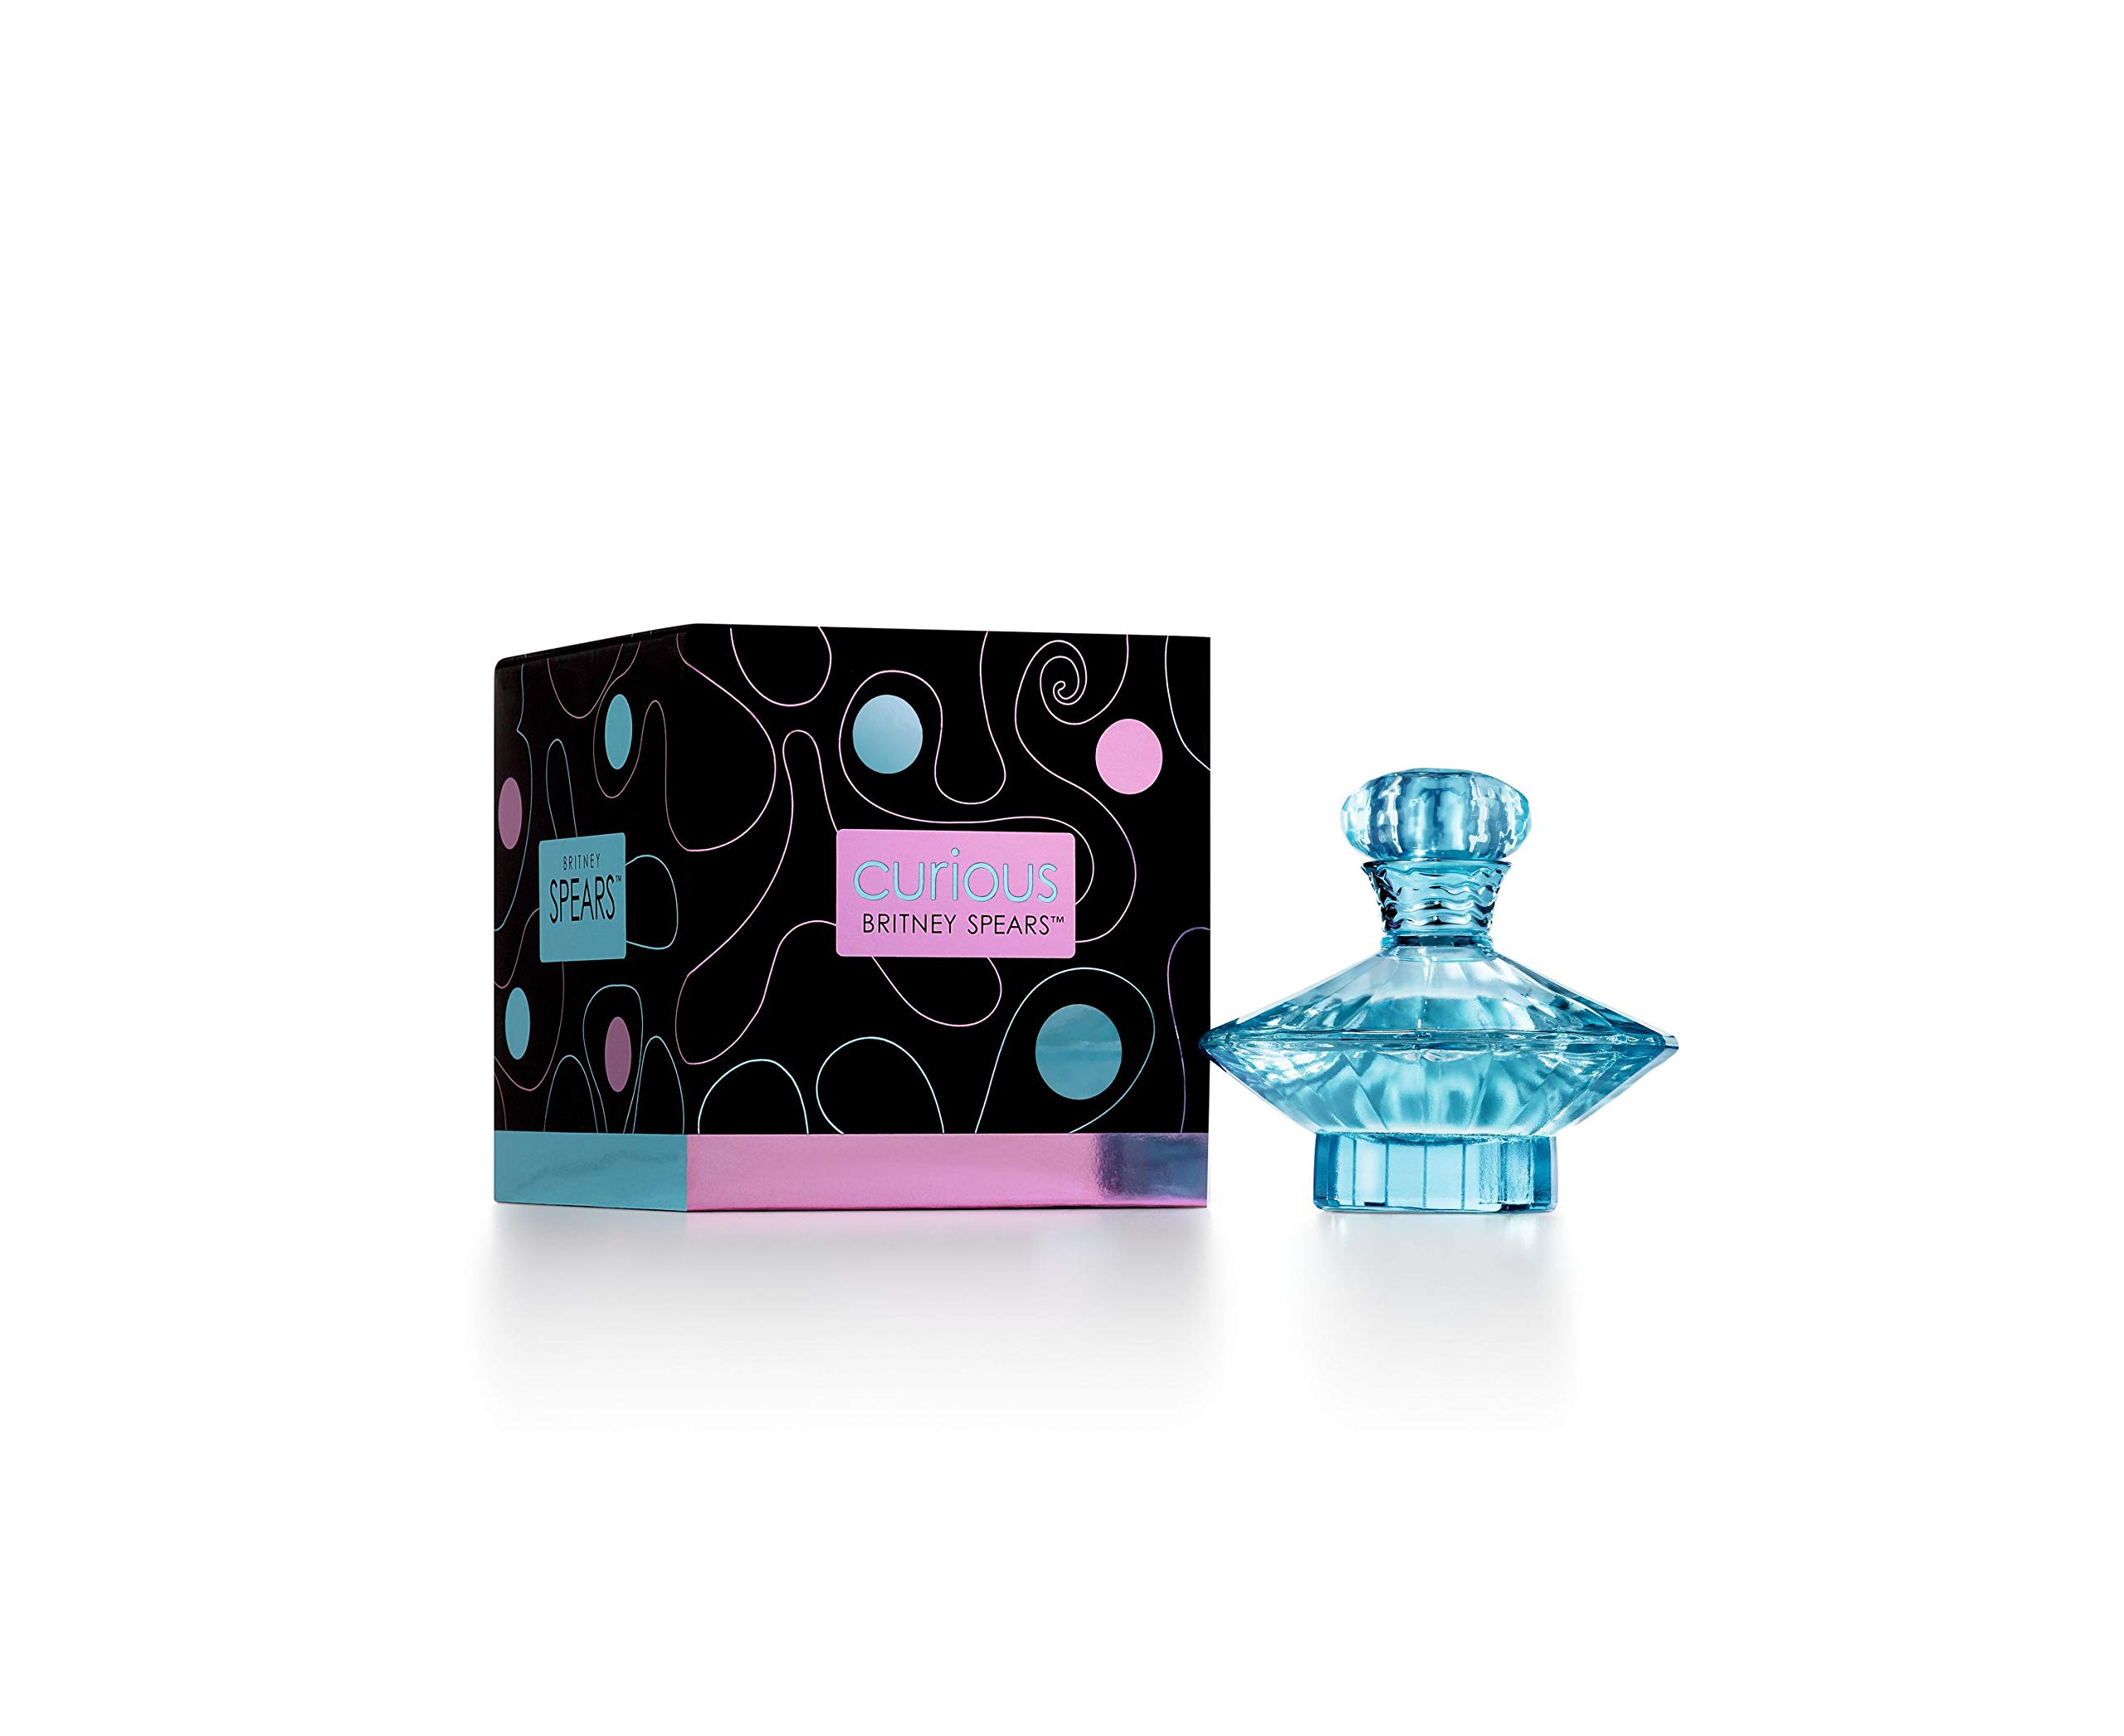 Britney Spears Women's Perfume, Curious, Eau De Parfum EDP Spray, 3.3 Fl Oz